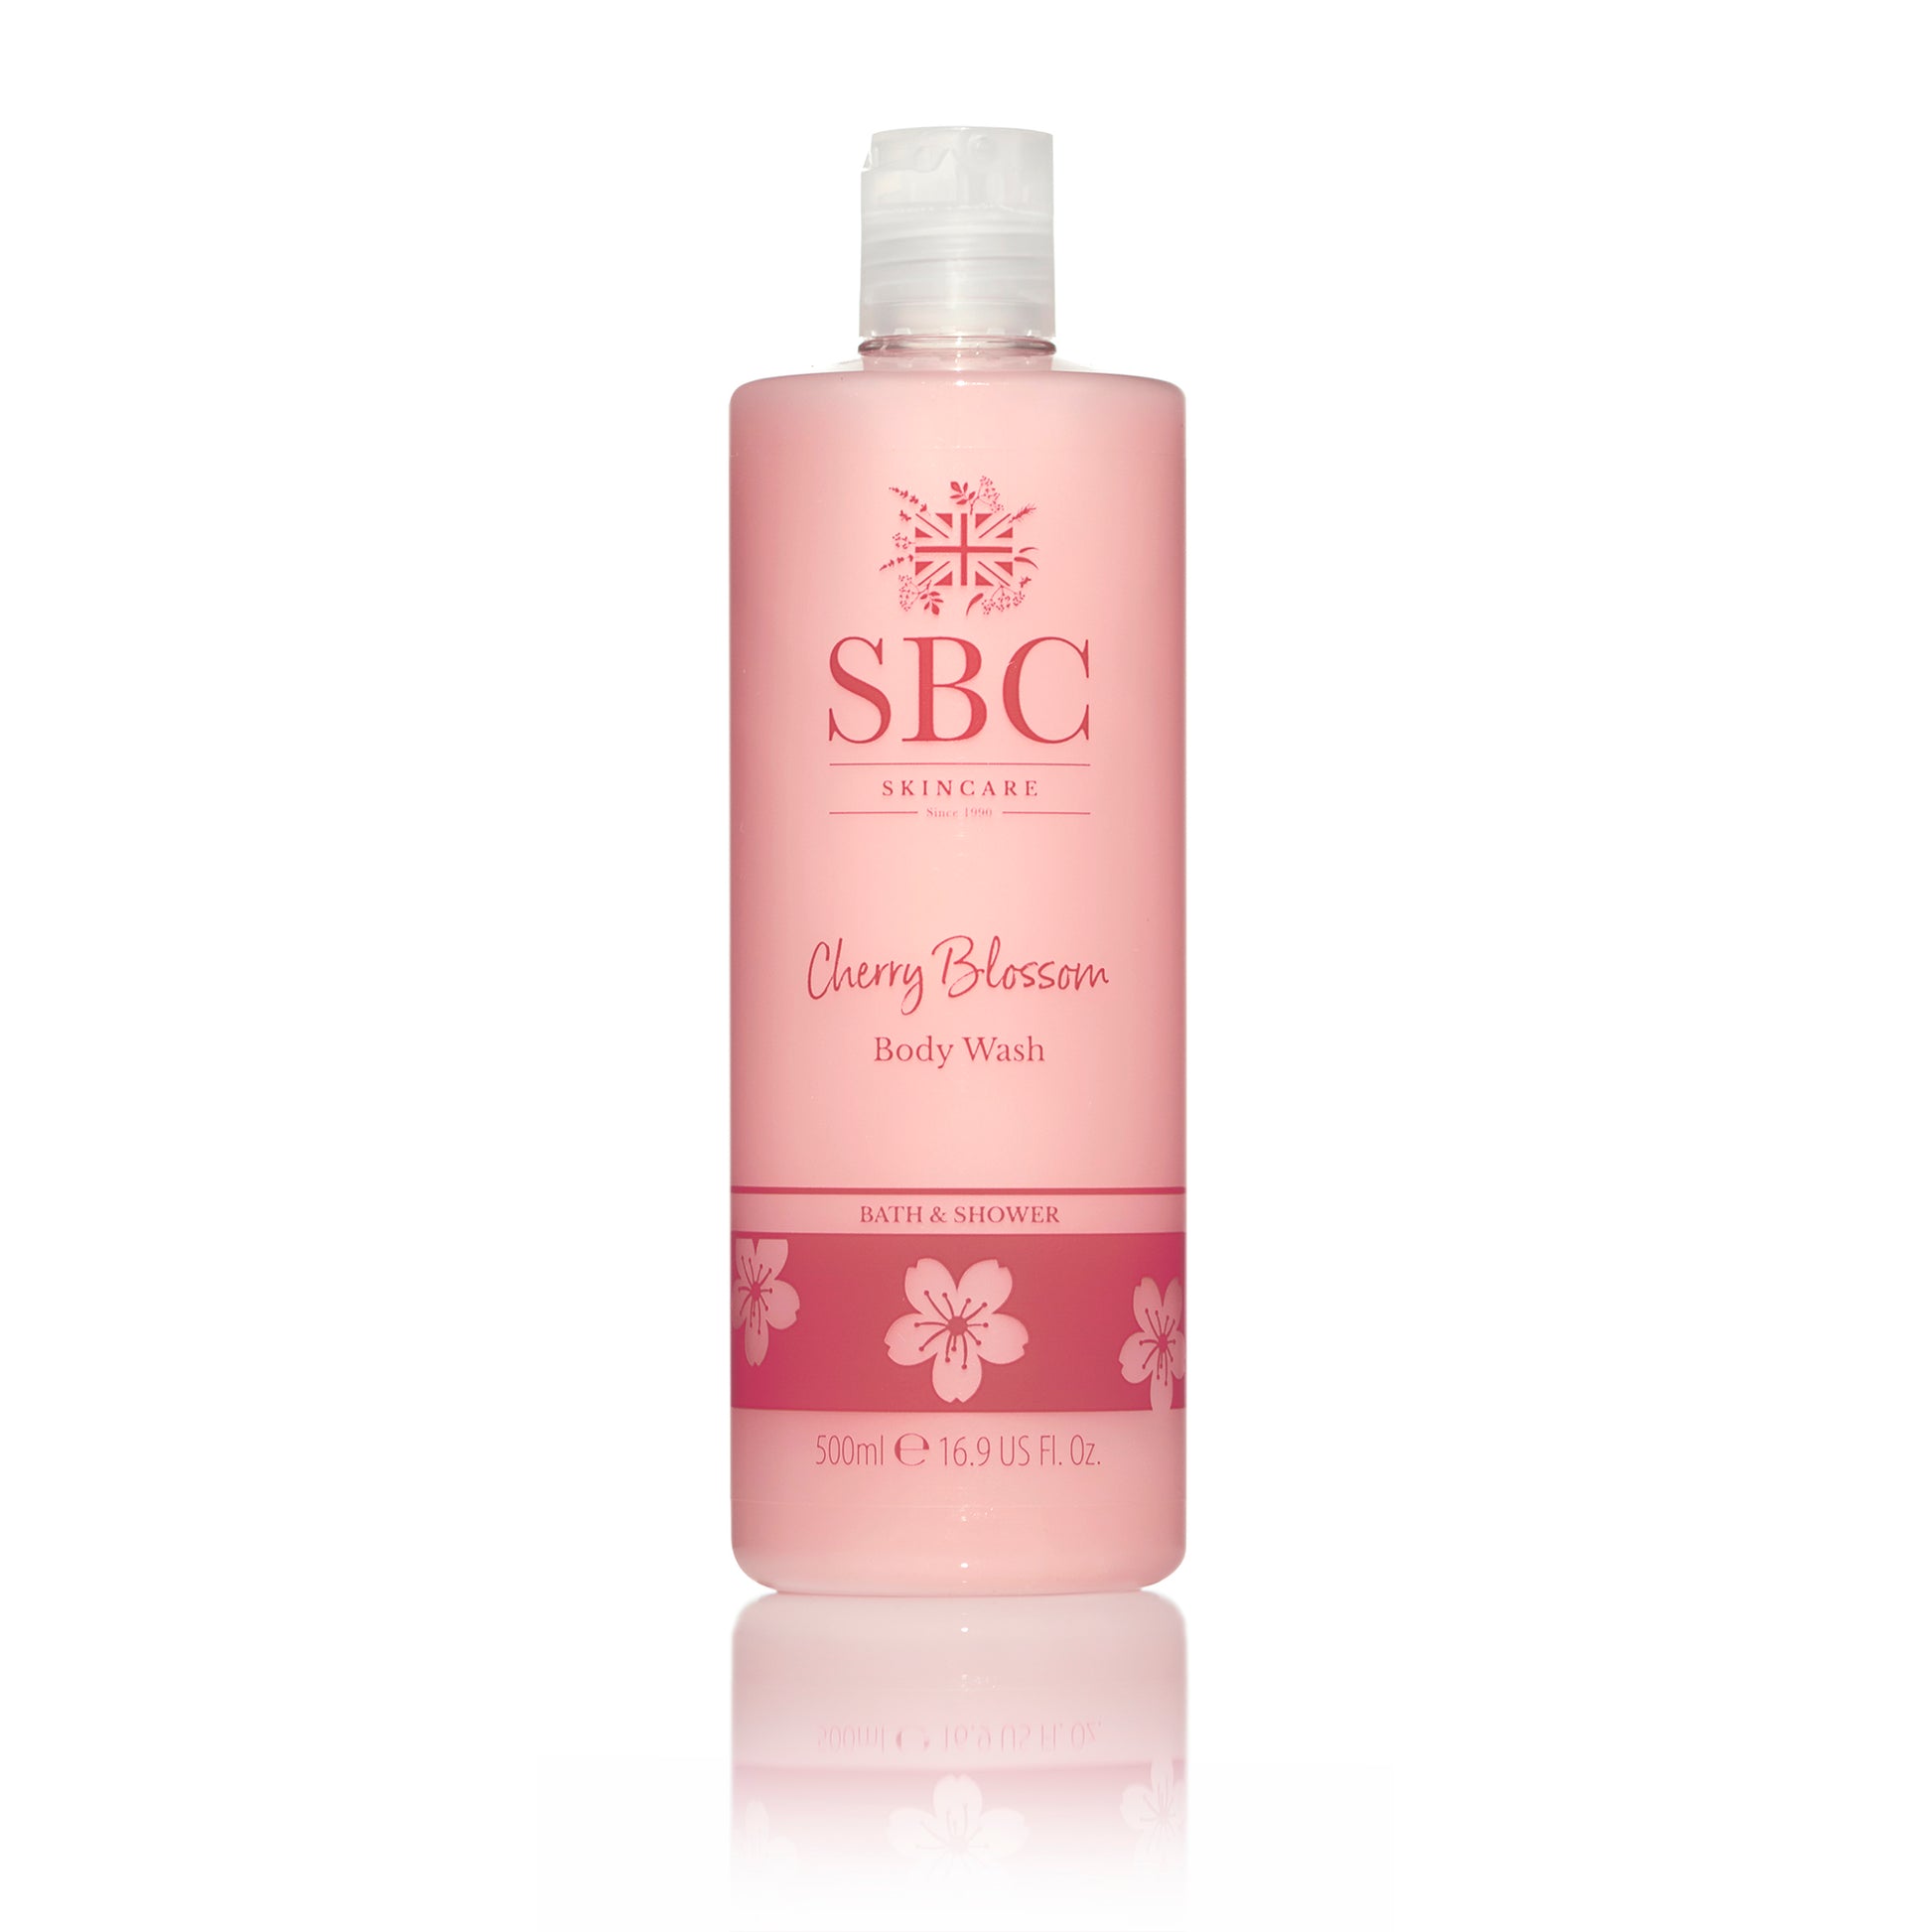 SBC Skincare's Cherry Blossom Body Wash on a white background 